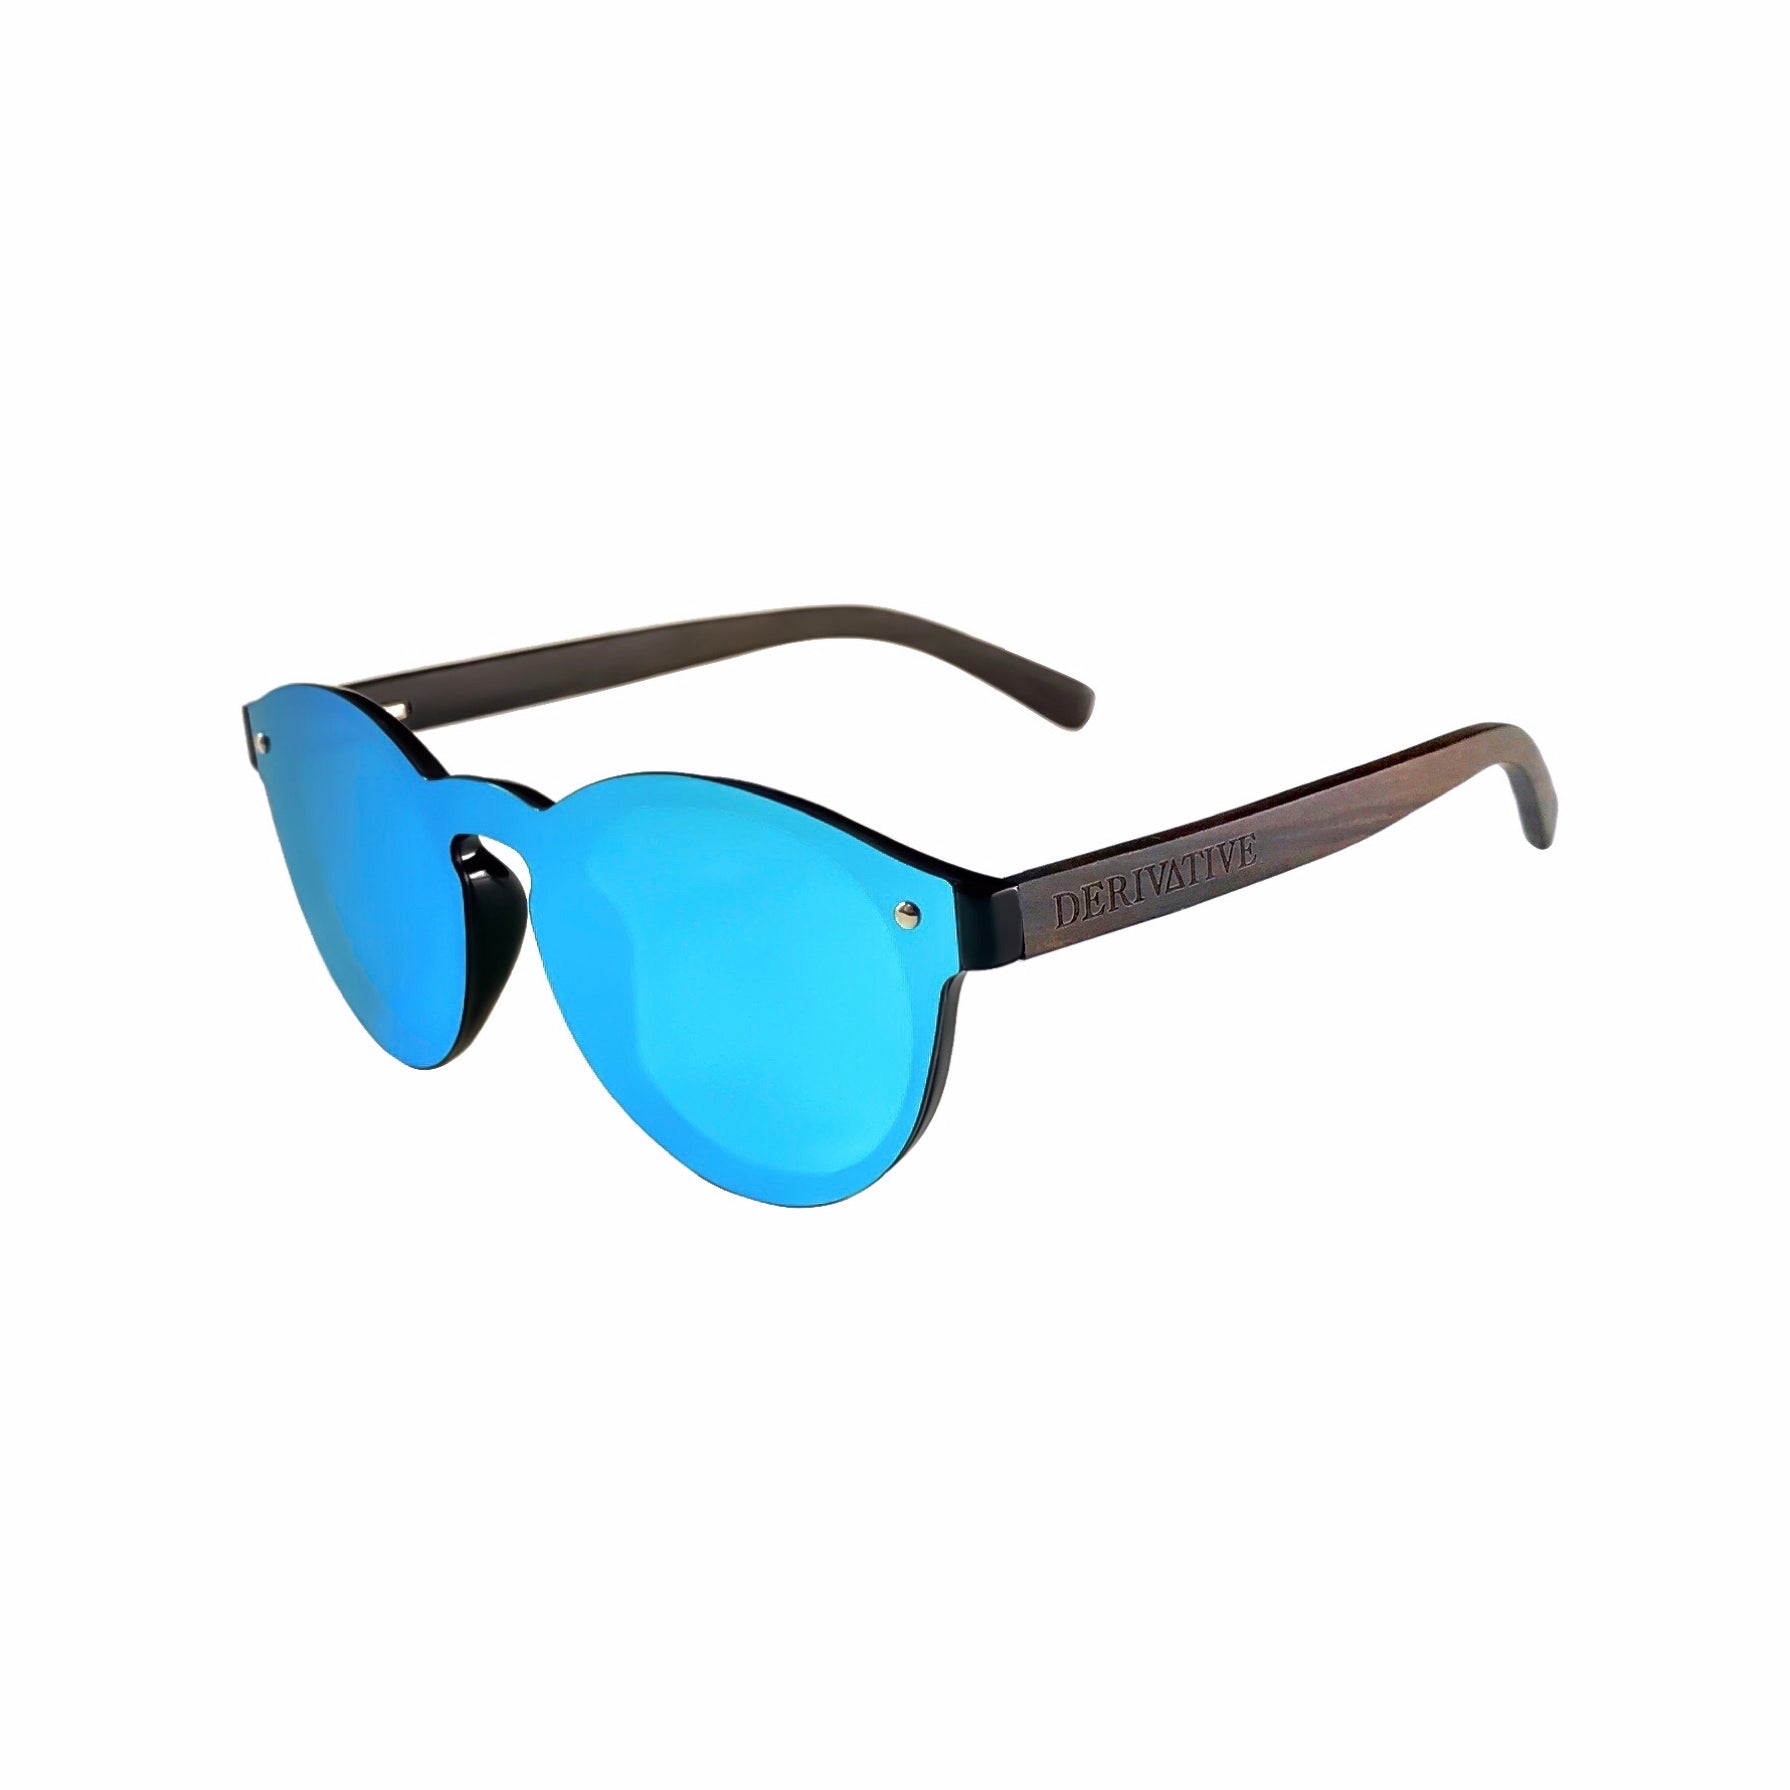 Blue round rimless sunglasses by derivative